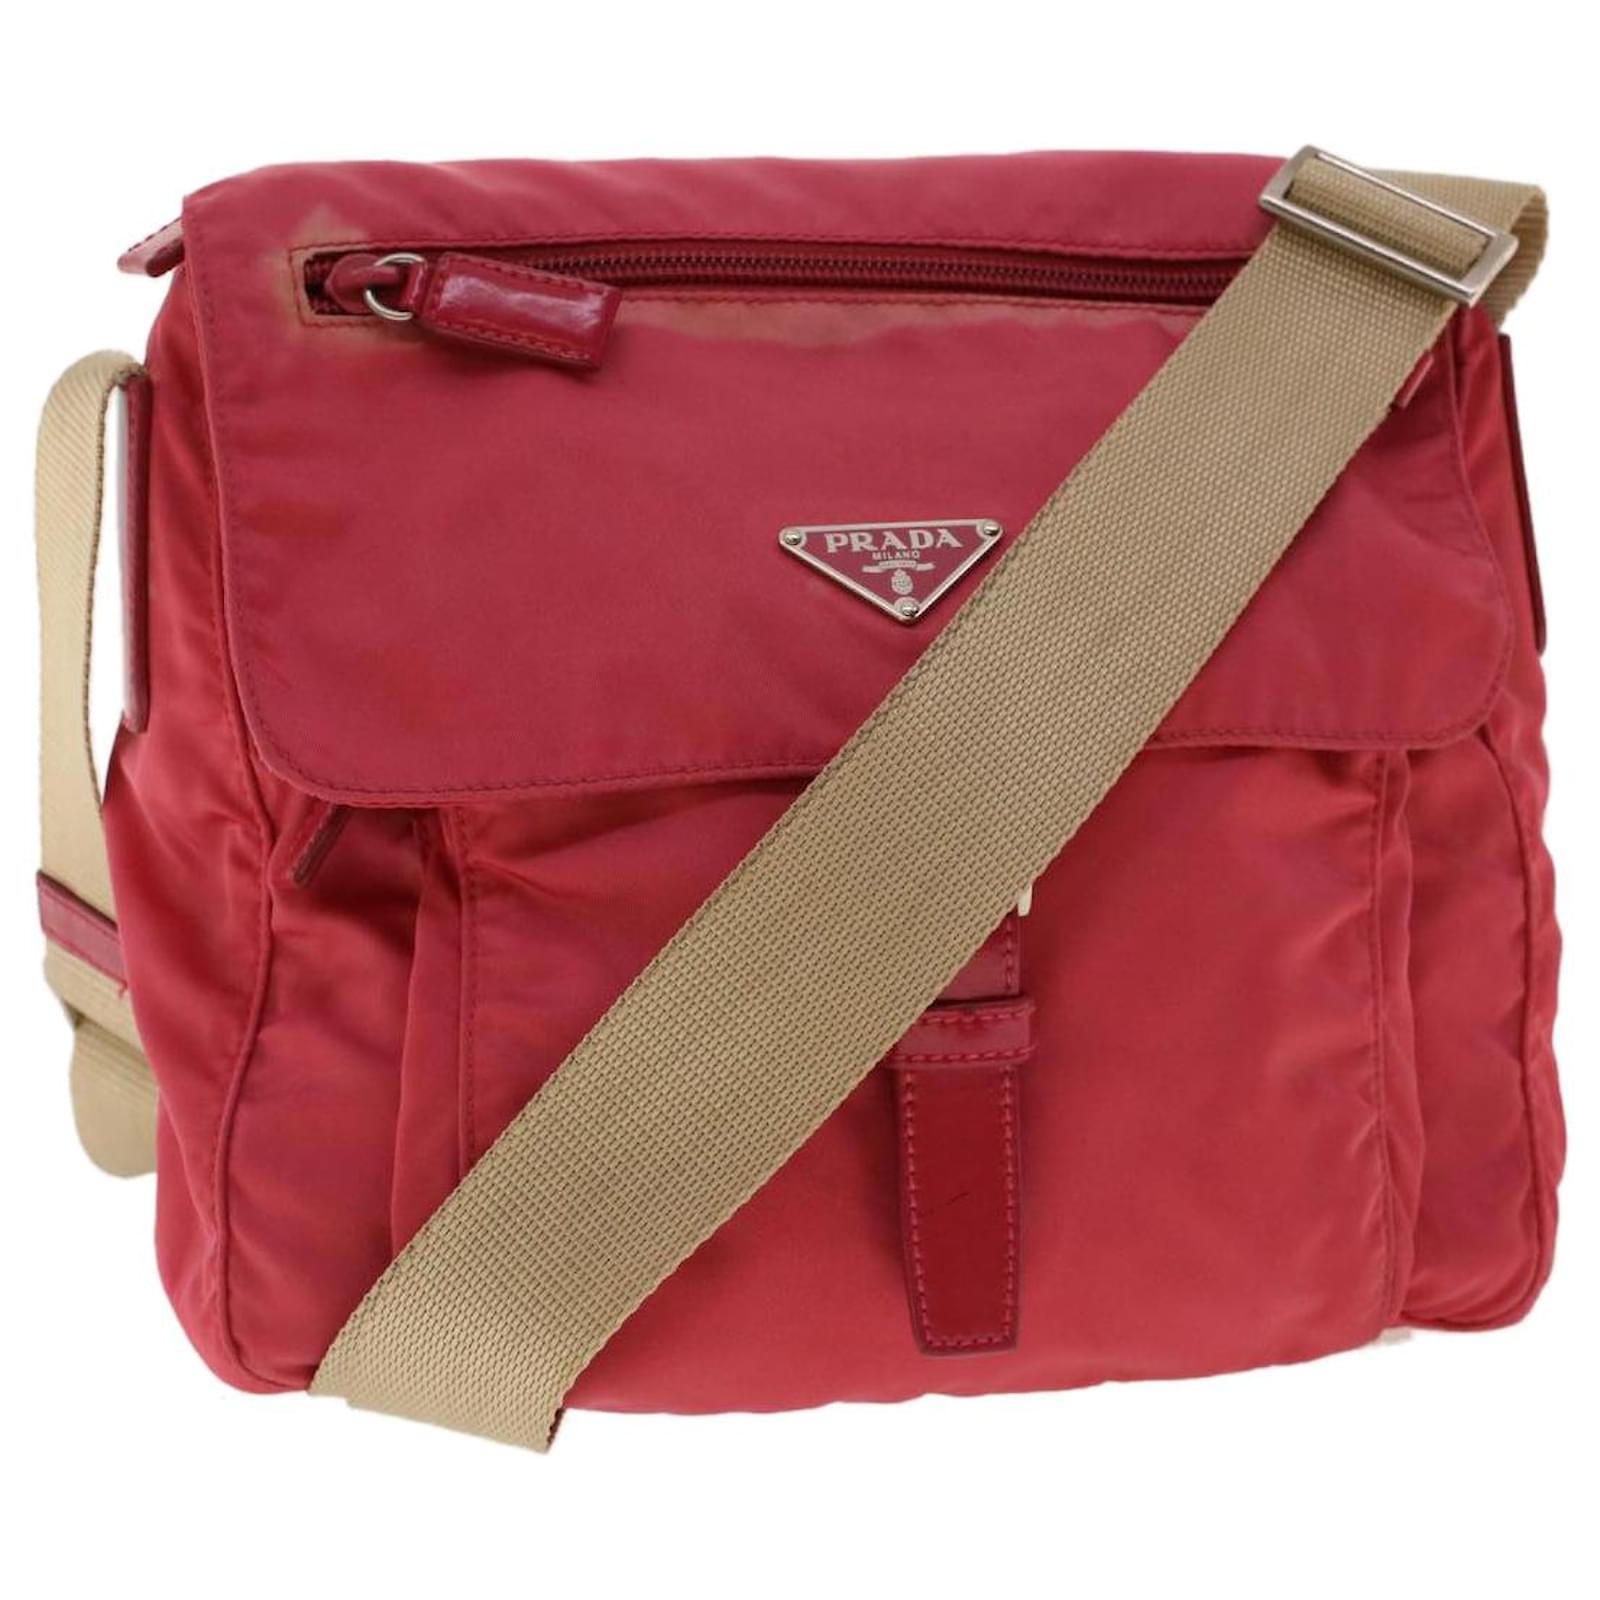 Pink Prada Sling Bag  Sling bag, Bags, Prada sling bag